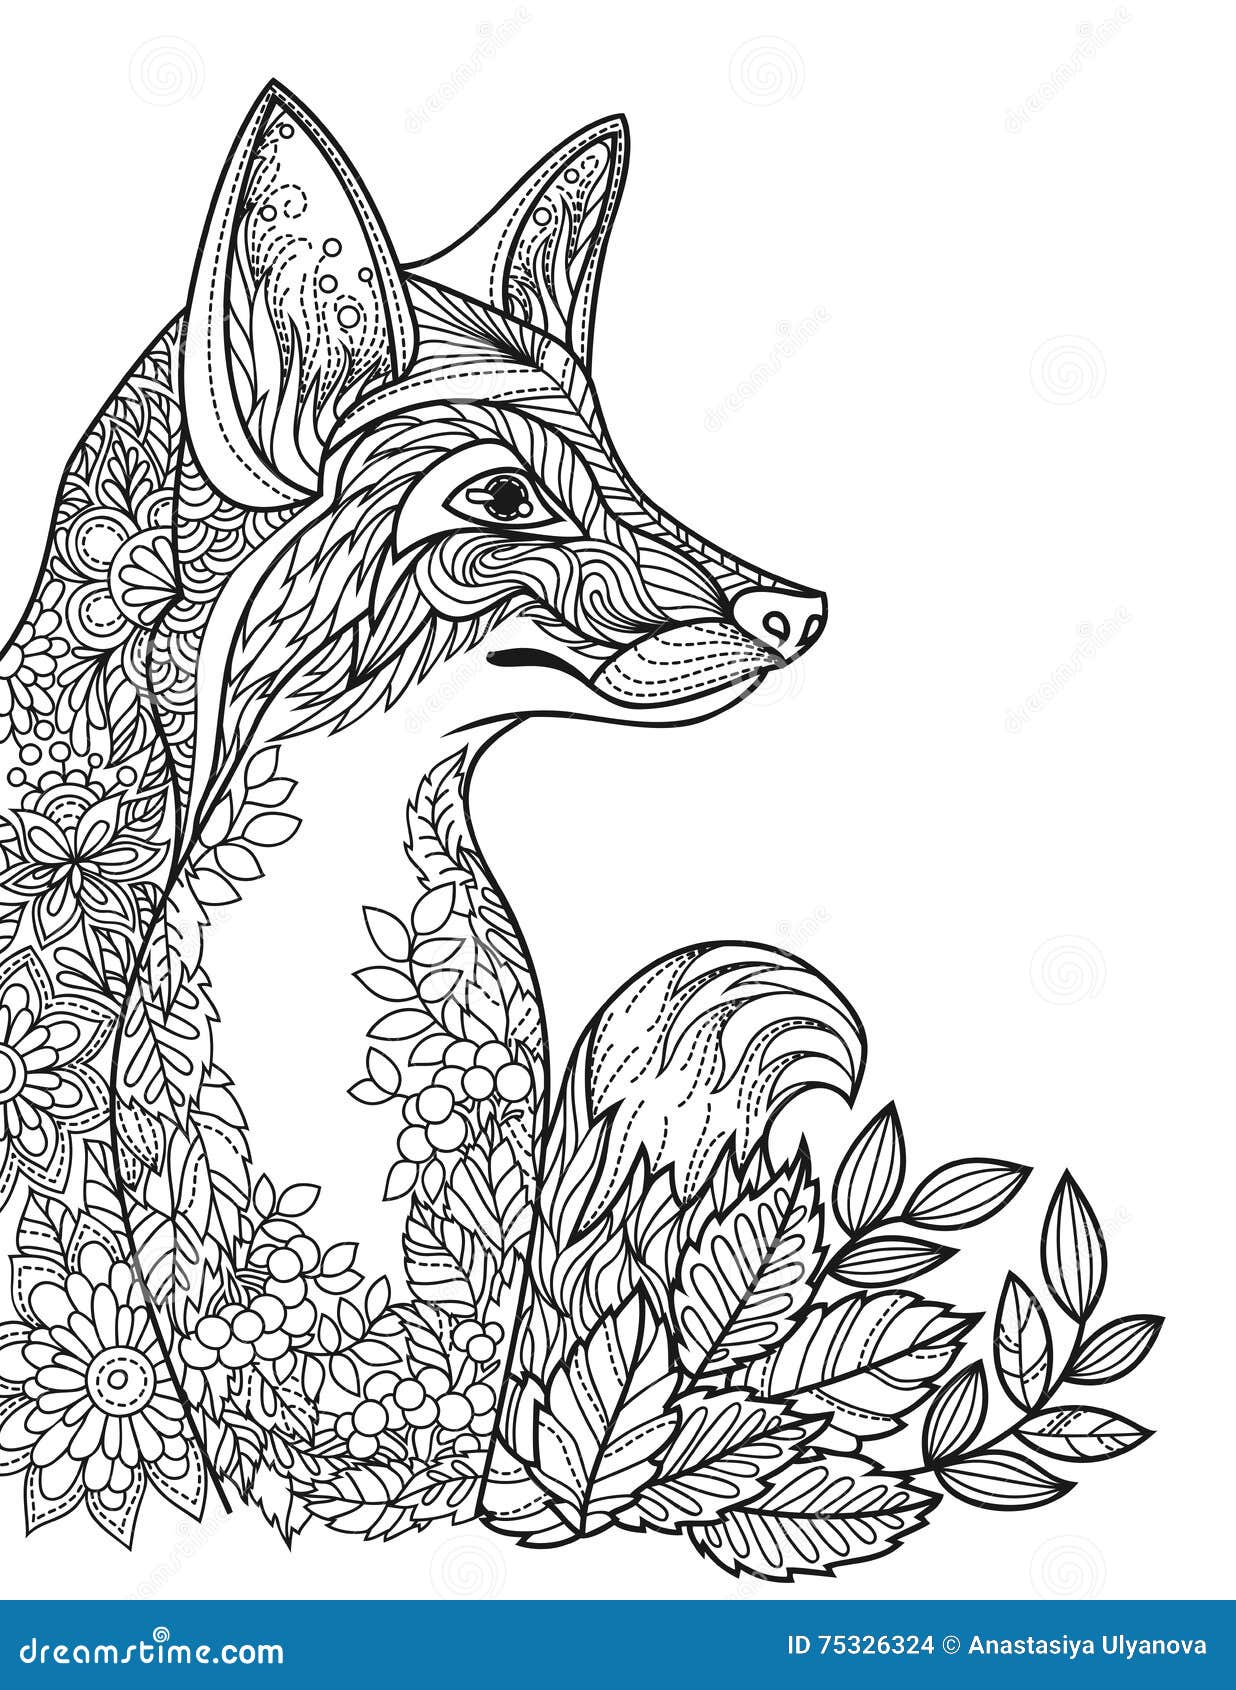 Desenhos para colorir gratuitos de Raposas para baixar - Raposas - Coloring  Pages for Adults